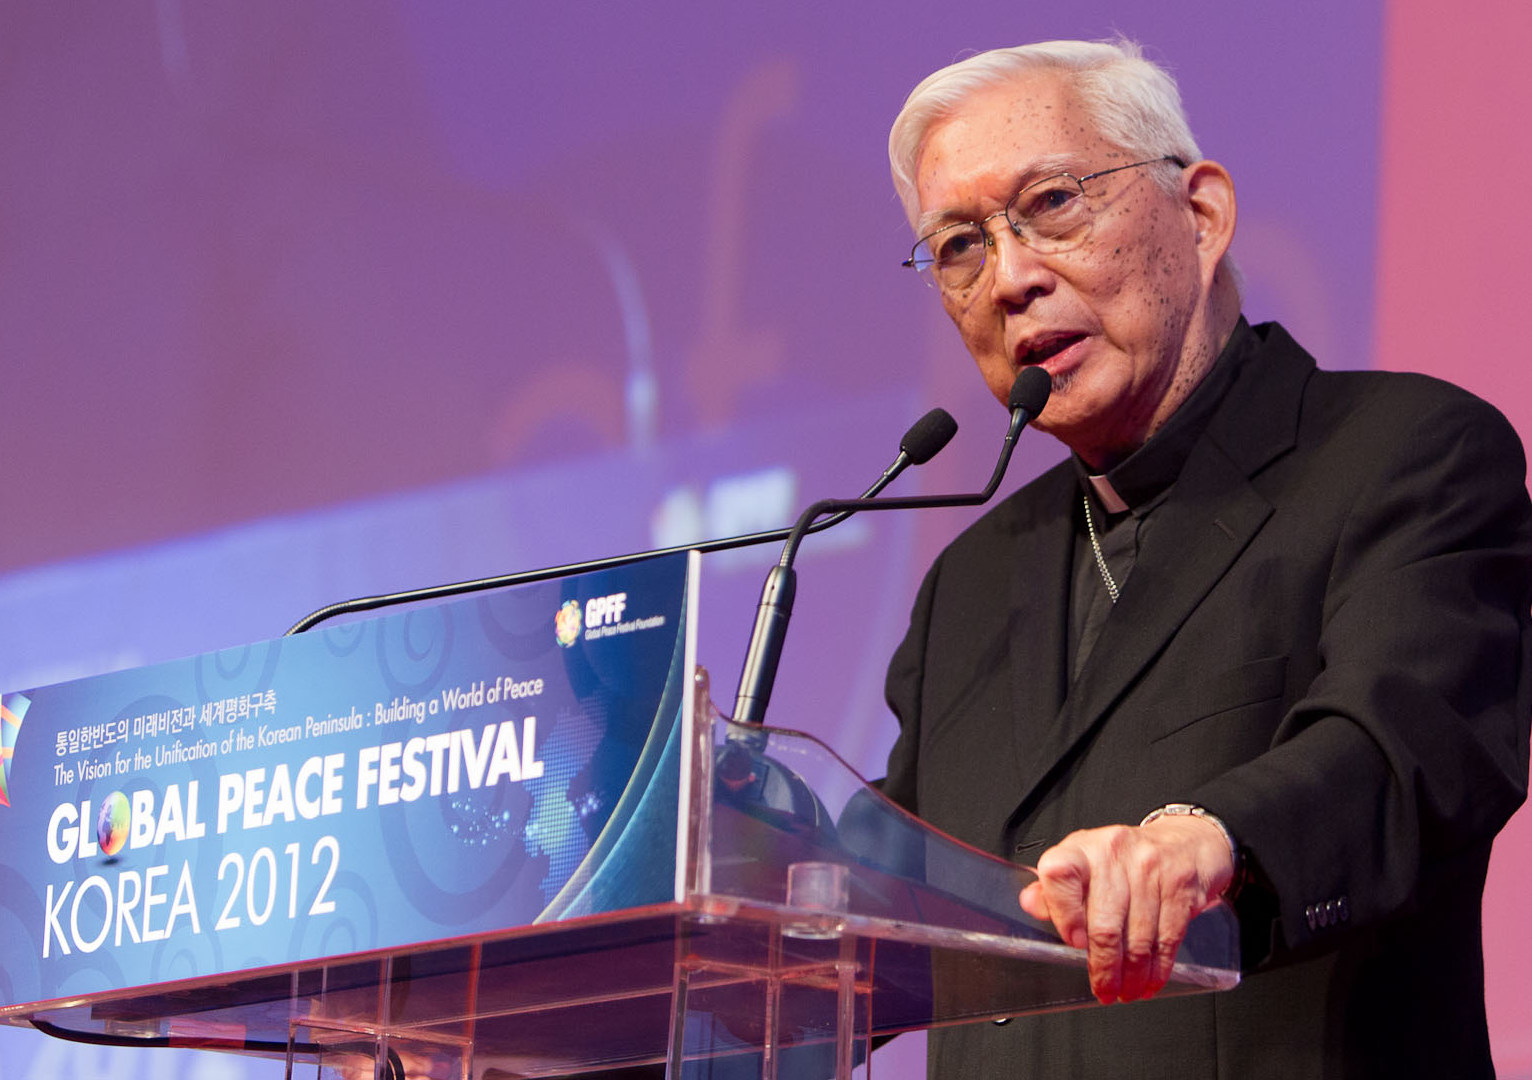 h.e.-cardinal-gaudencio-borbon-speaks-at-the-global-peace-leadership-conference-korea